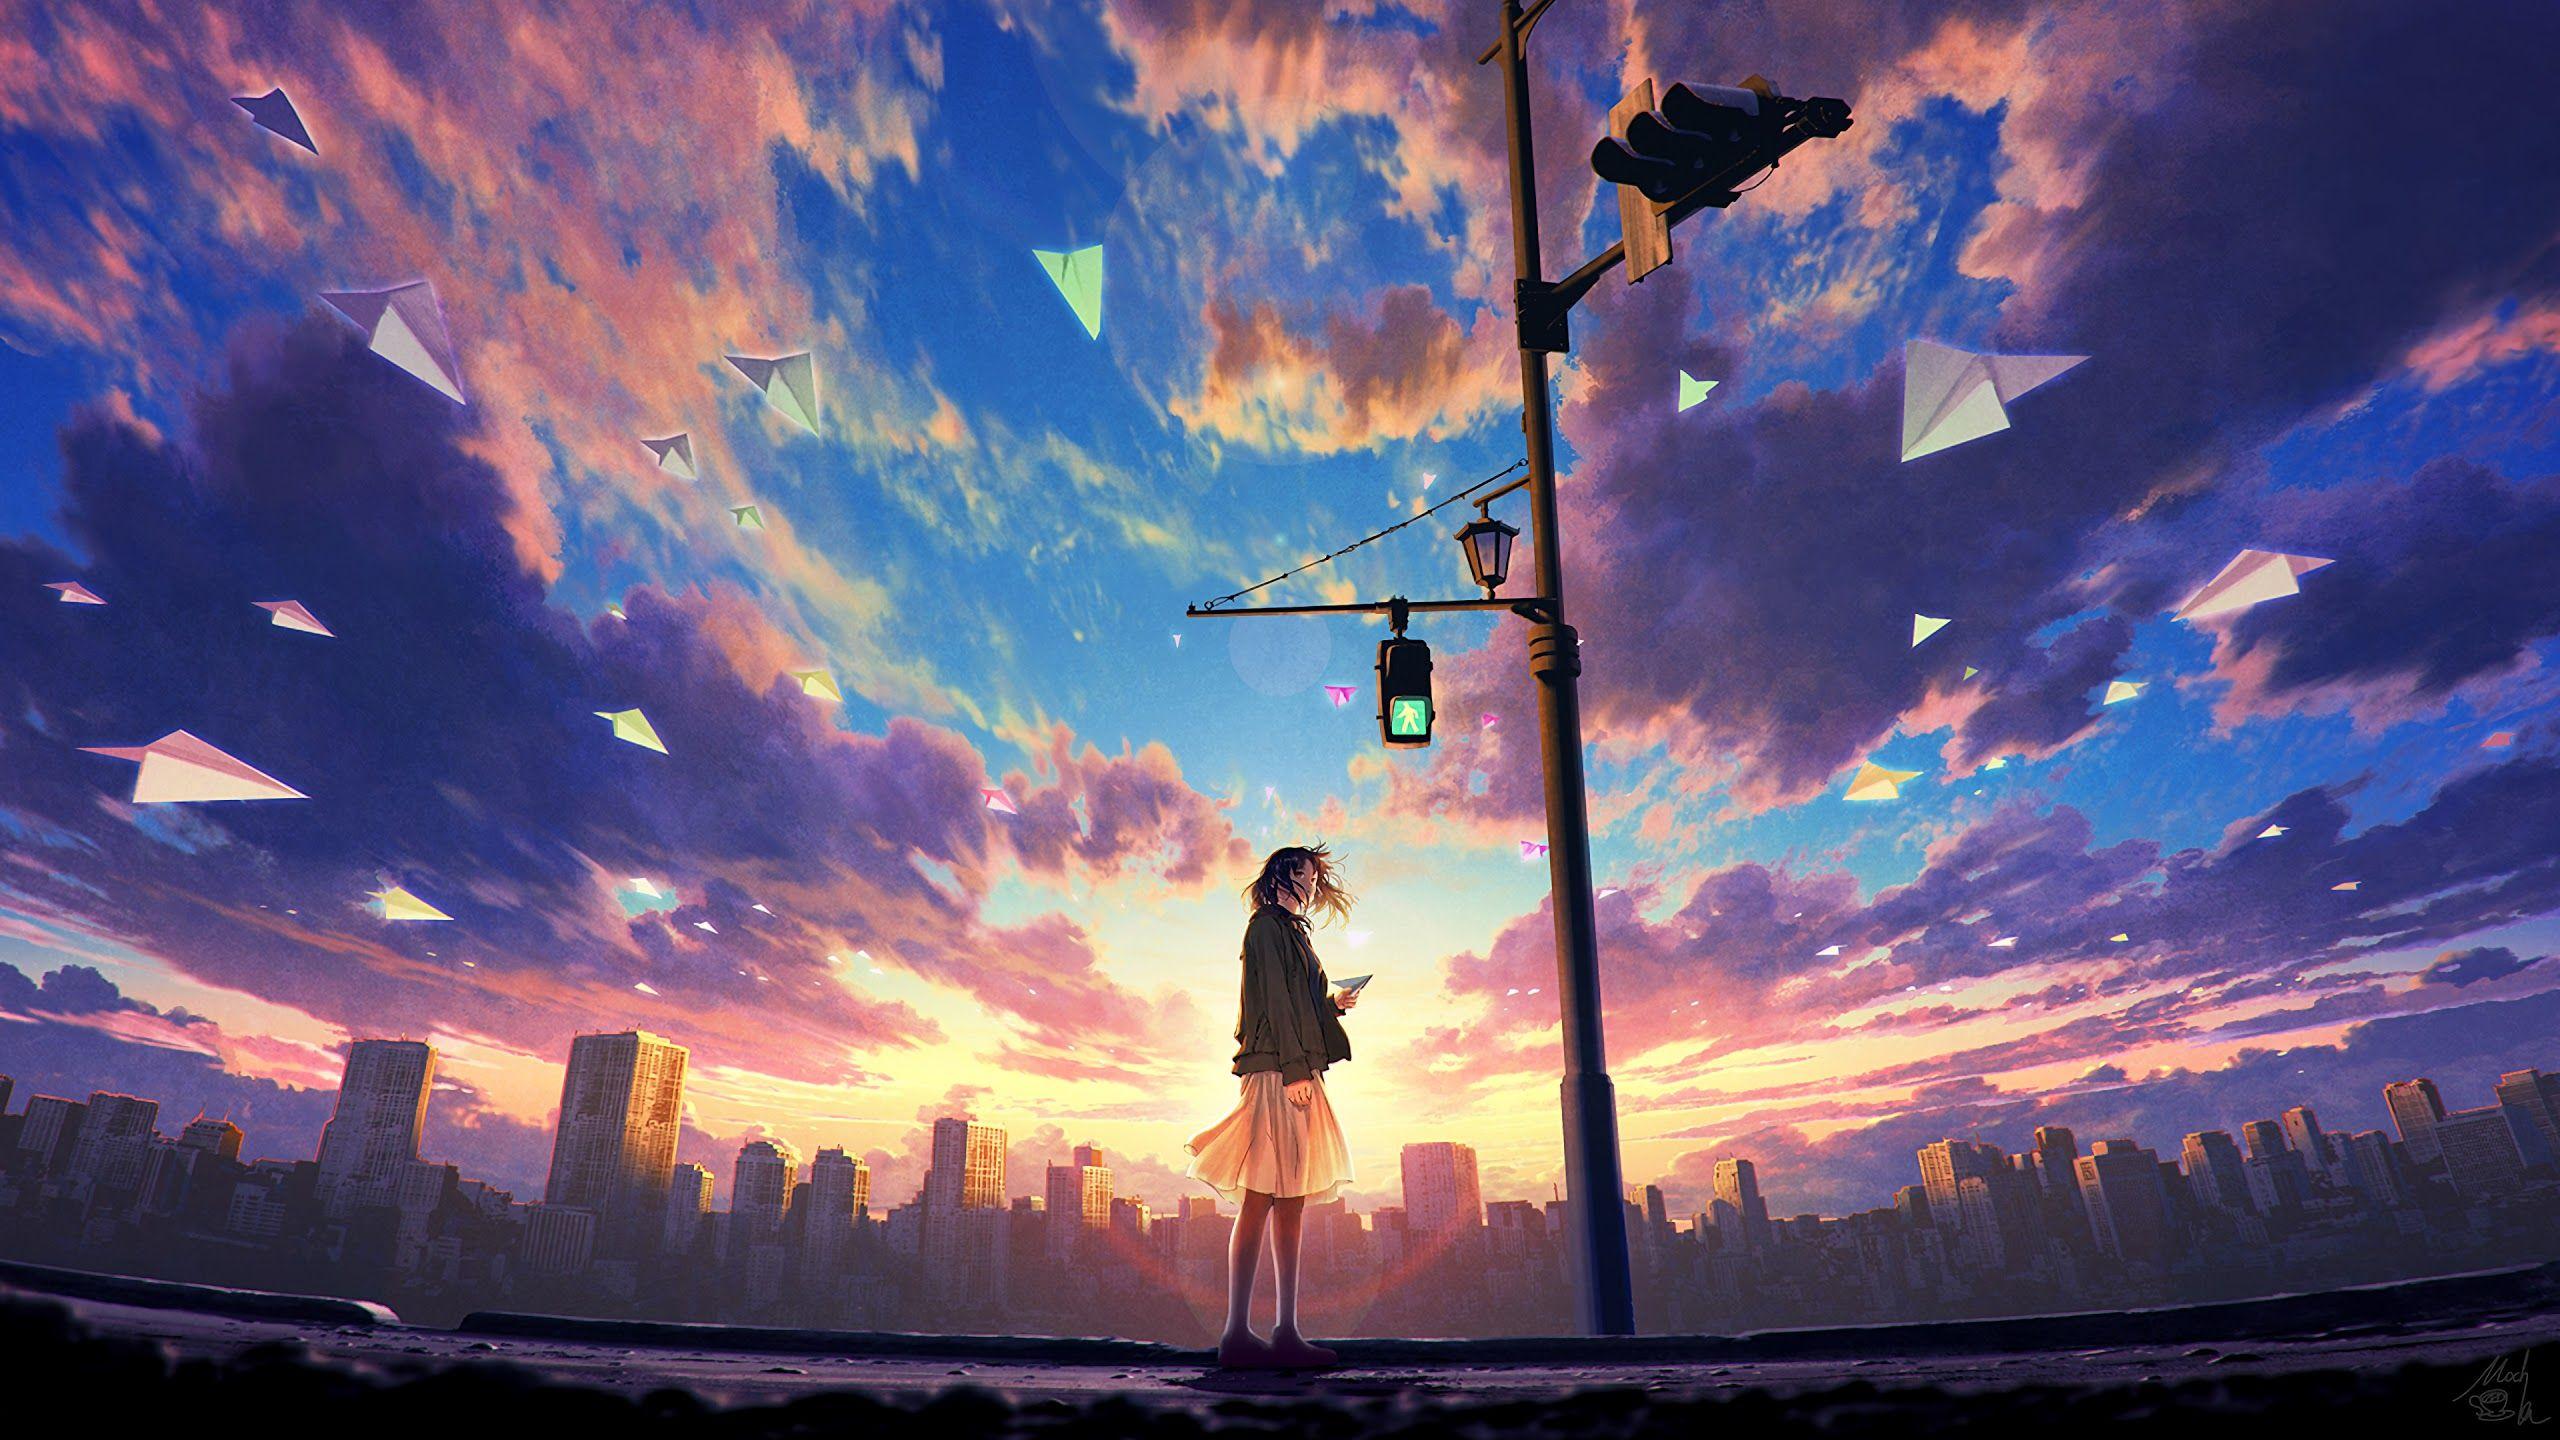 Sunrise Anime Wallpapers - Top Free Sunrise Anime ...